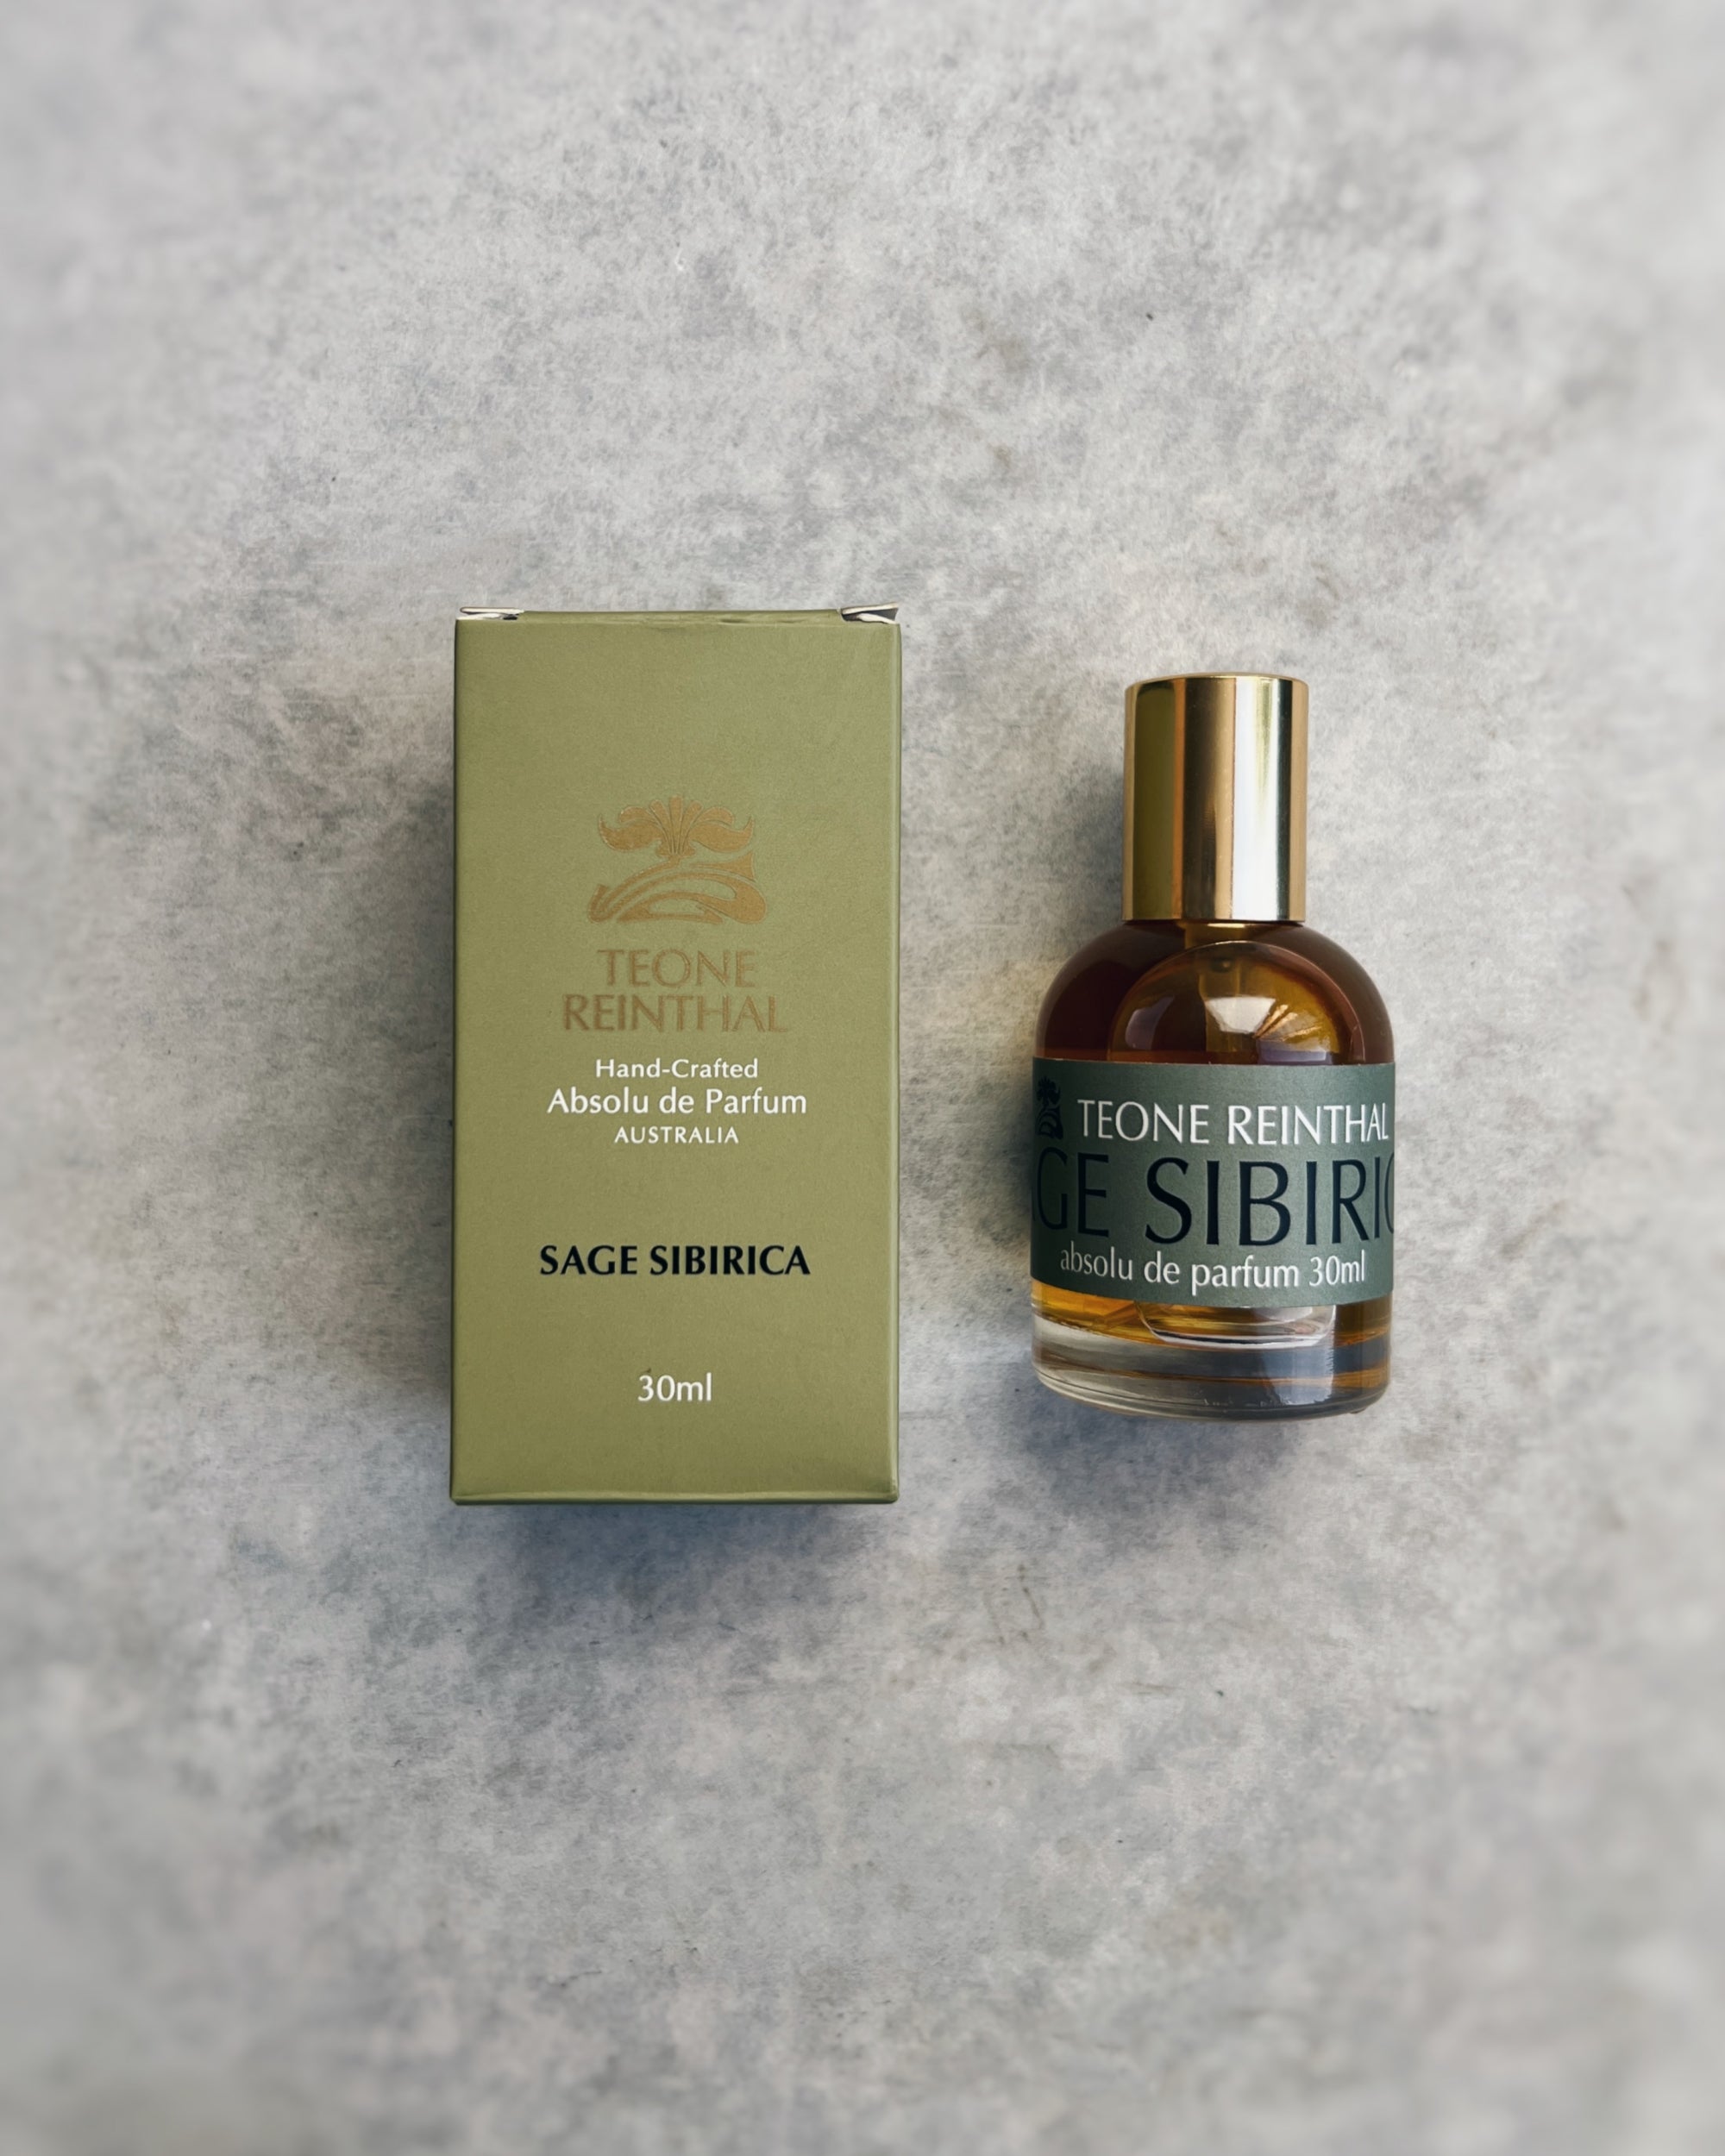 Teone Reinthal perfume : sage sibirica